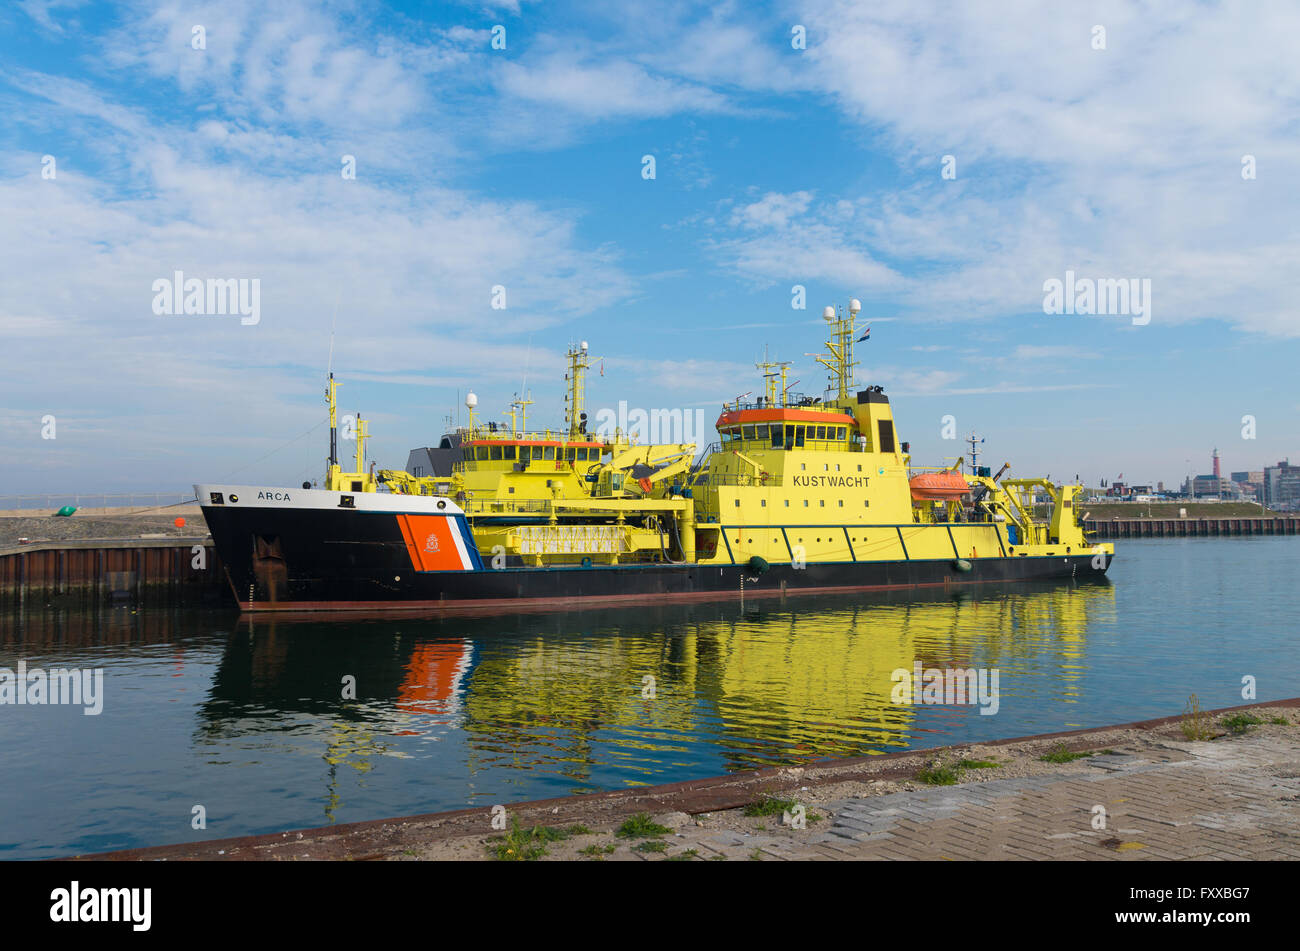 SCHEVENINGEN, NETHERLANDS - OCTOBER 3, 2015: Dutch coast guard ship ARCA in the scheveningen harbor Stock Photo